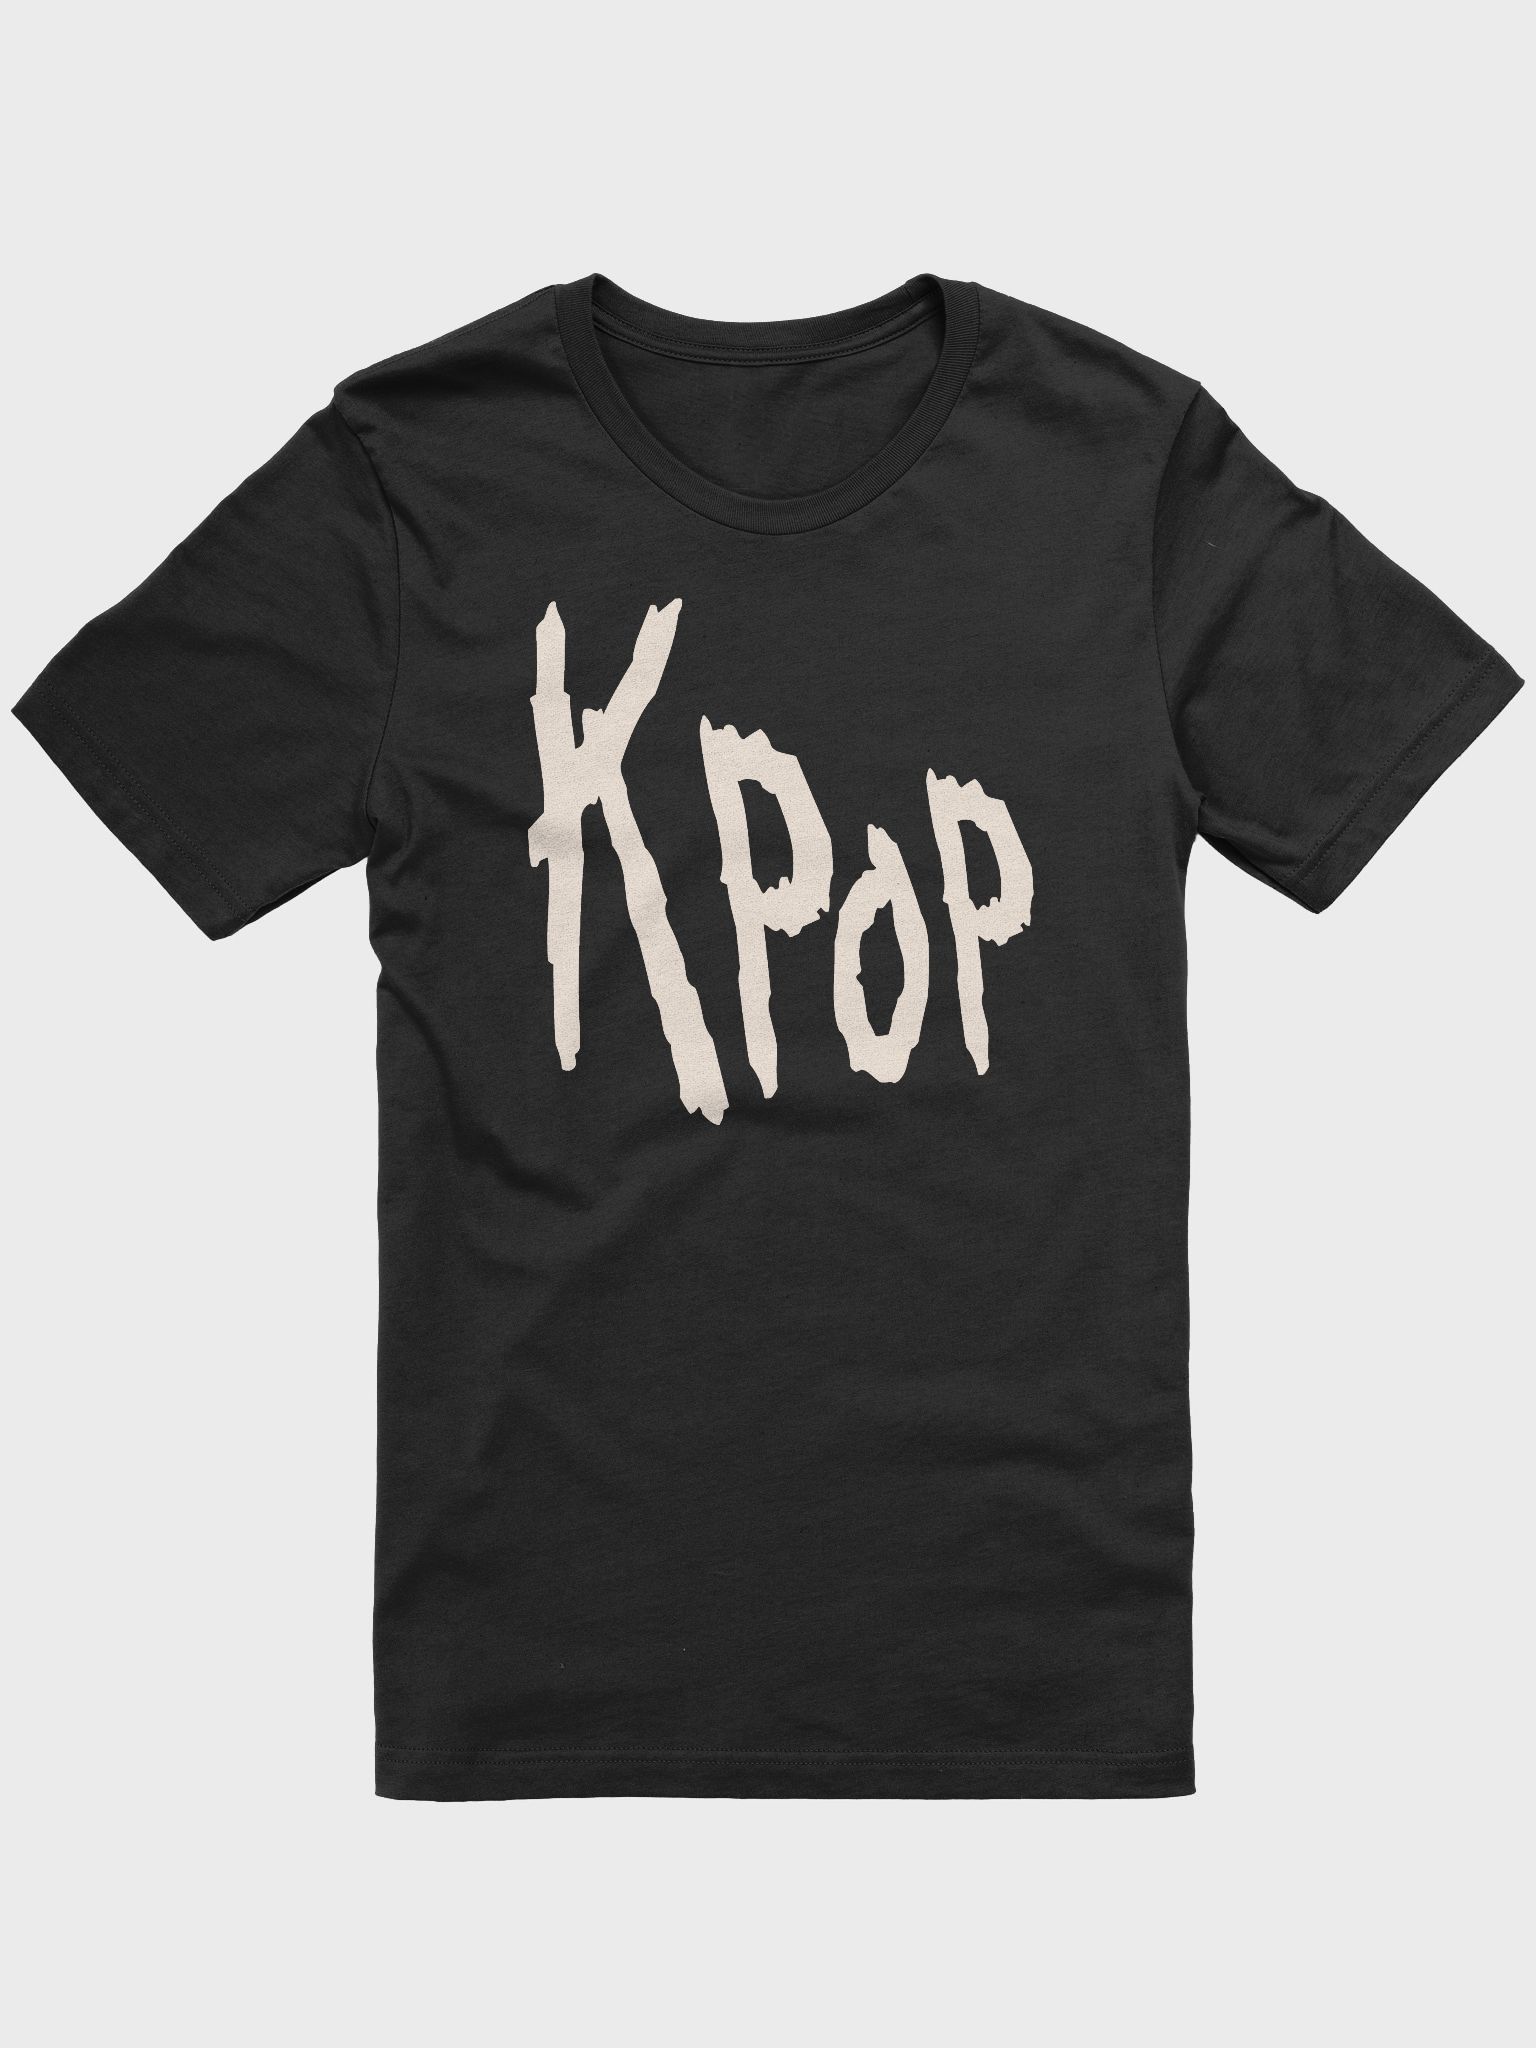 Kpop Jersey 